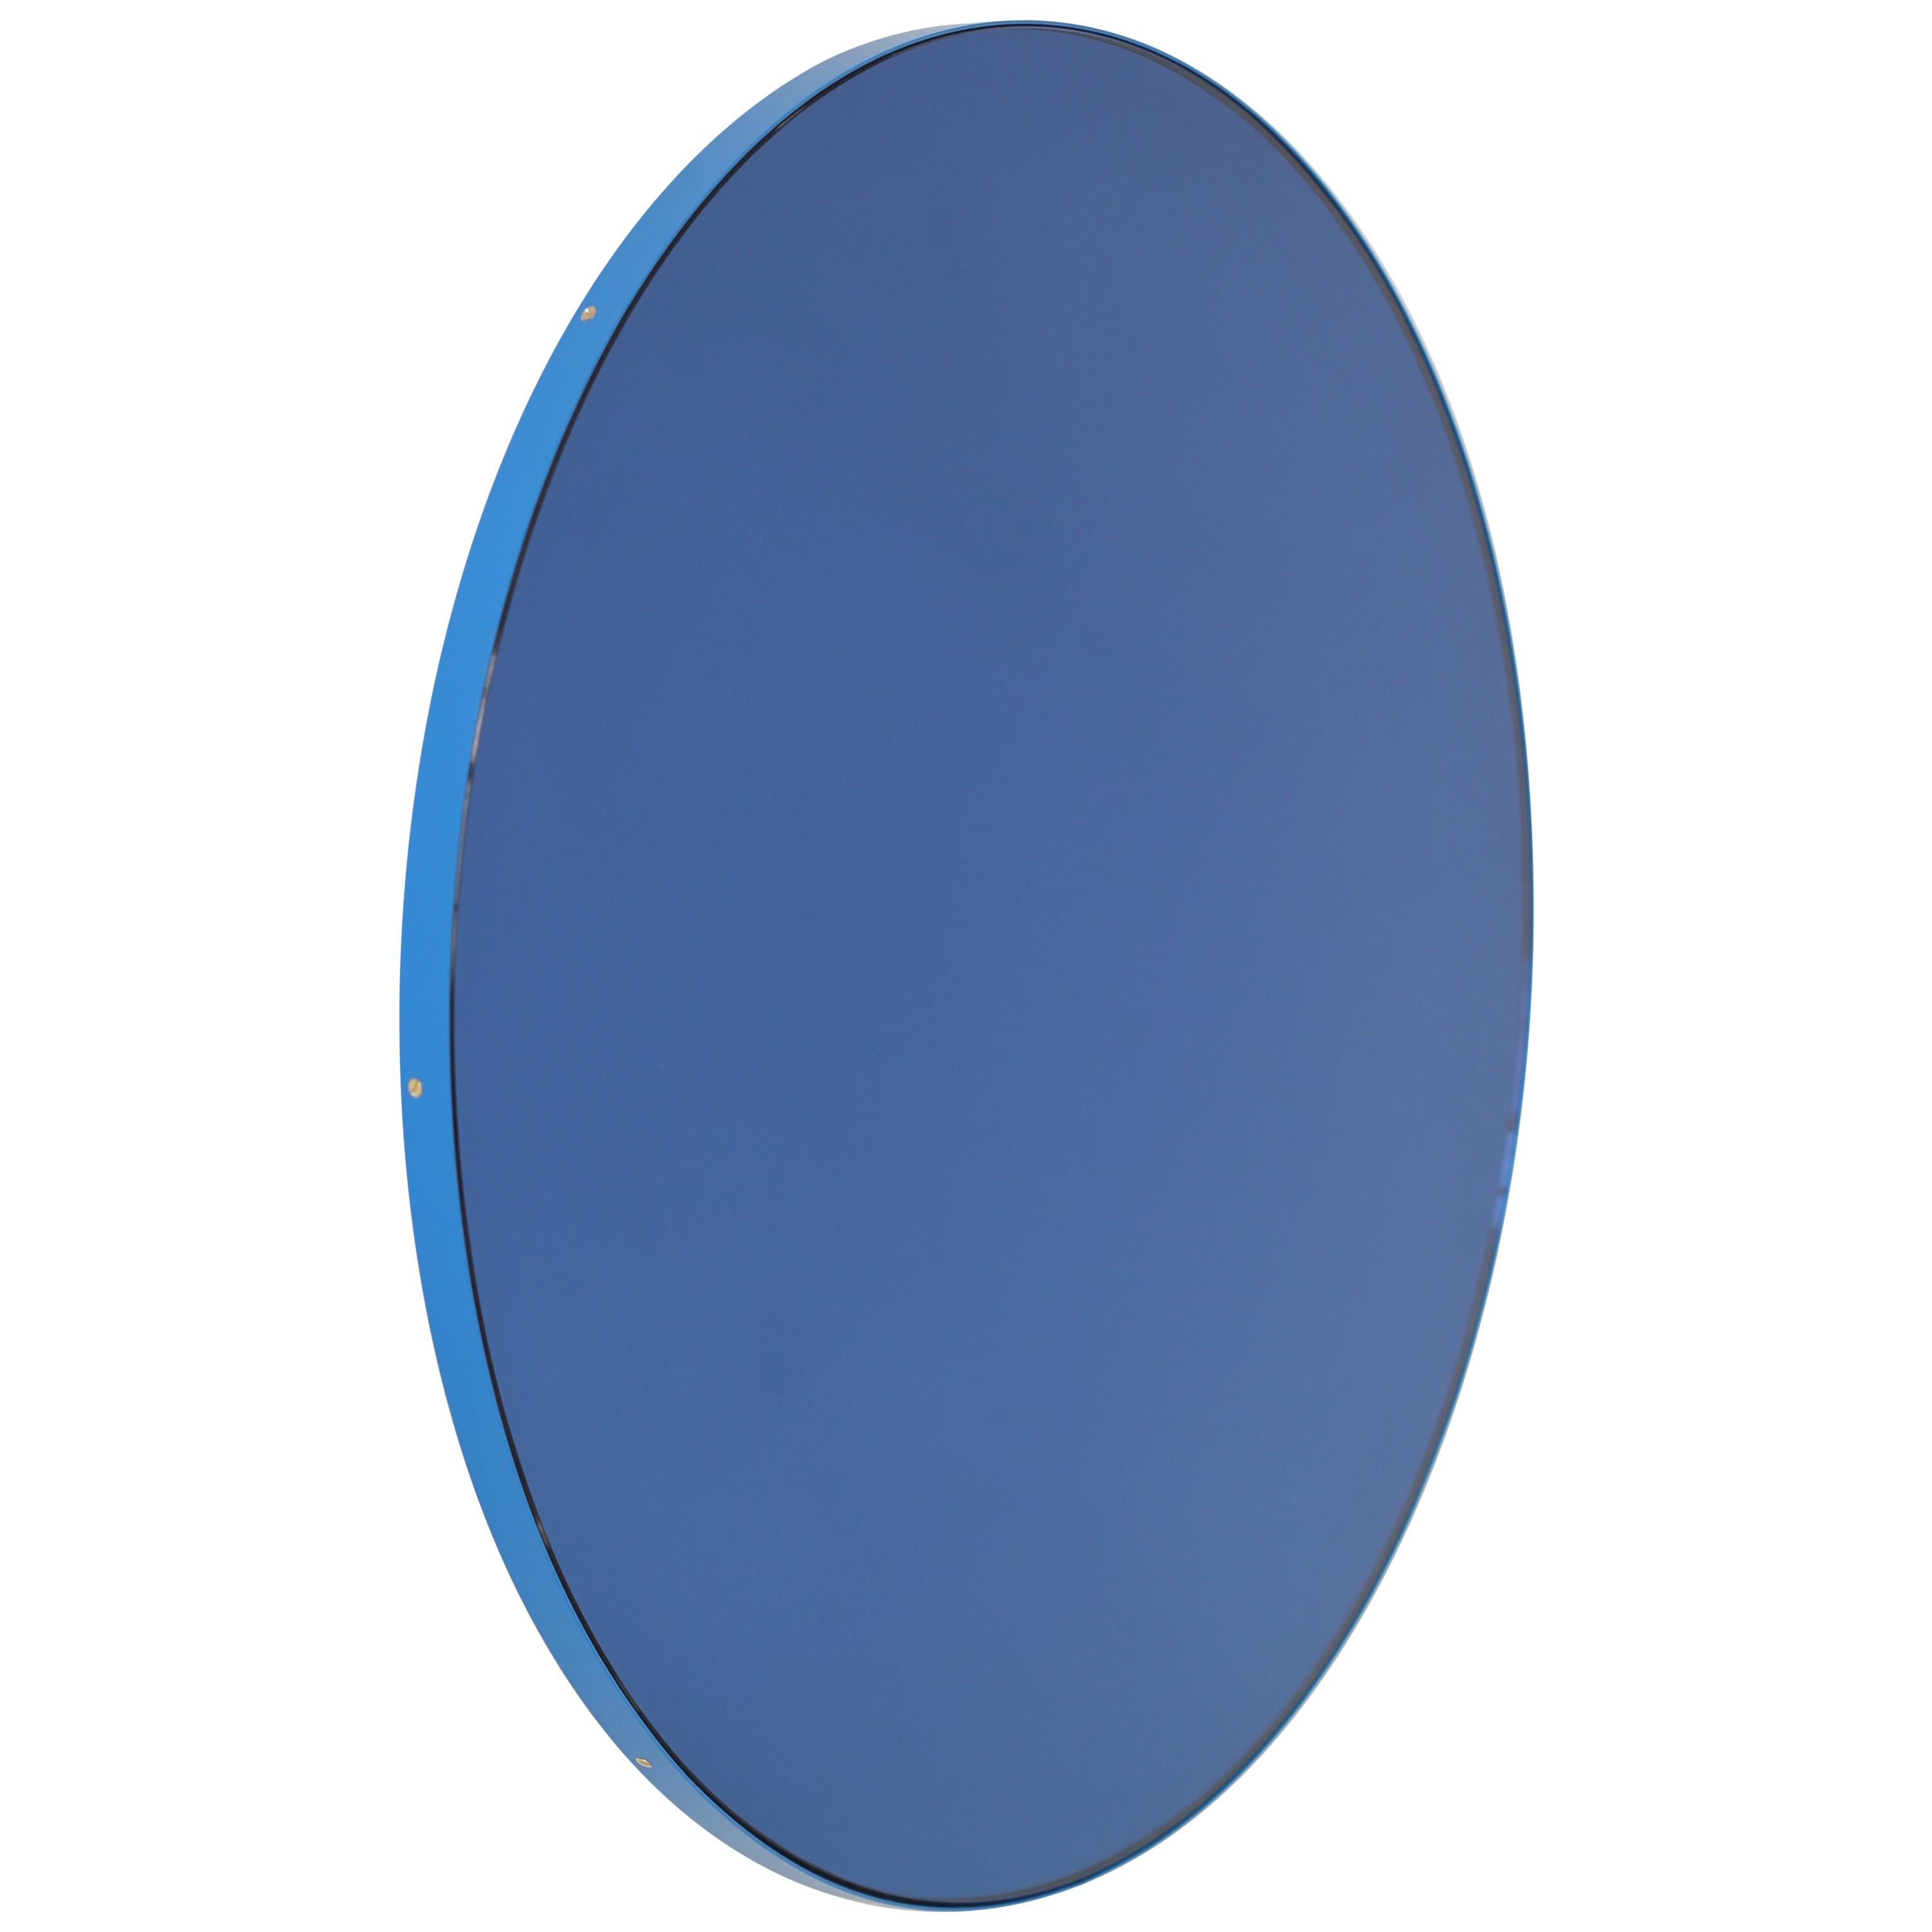 Orbis Blue Tinted Circular Mirror with a Contemporary Blue Frame, Bespoke, XL